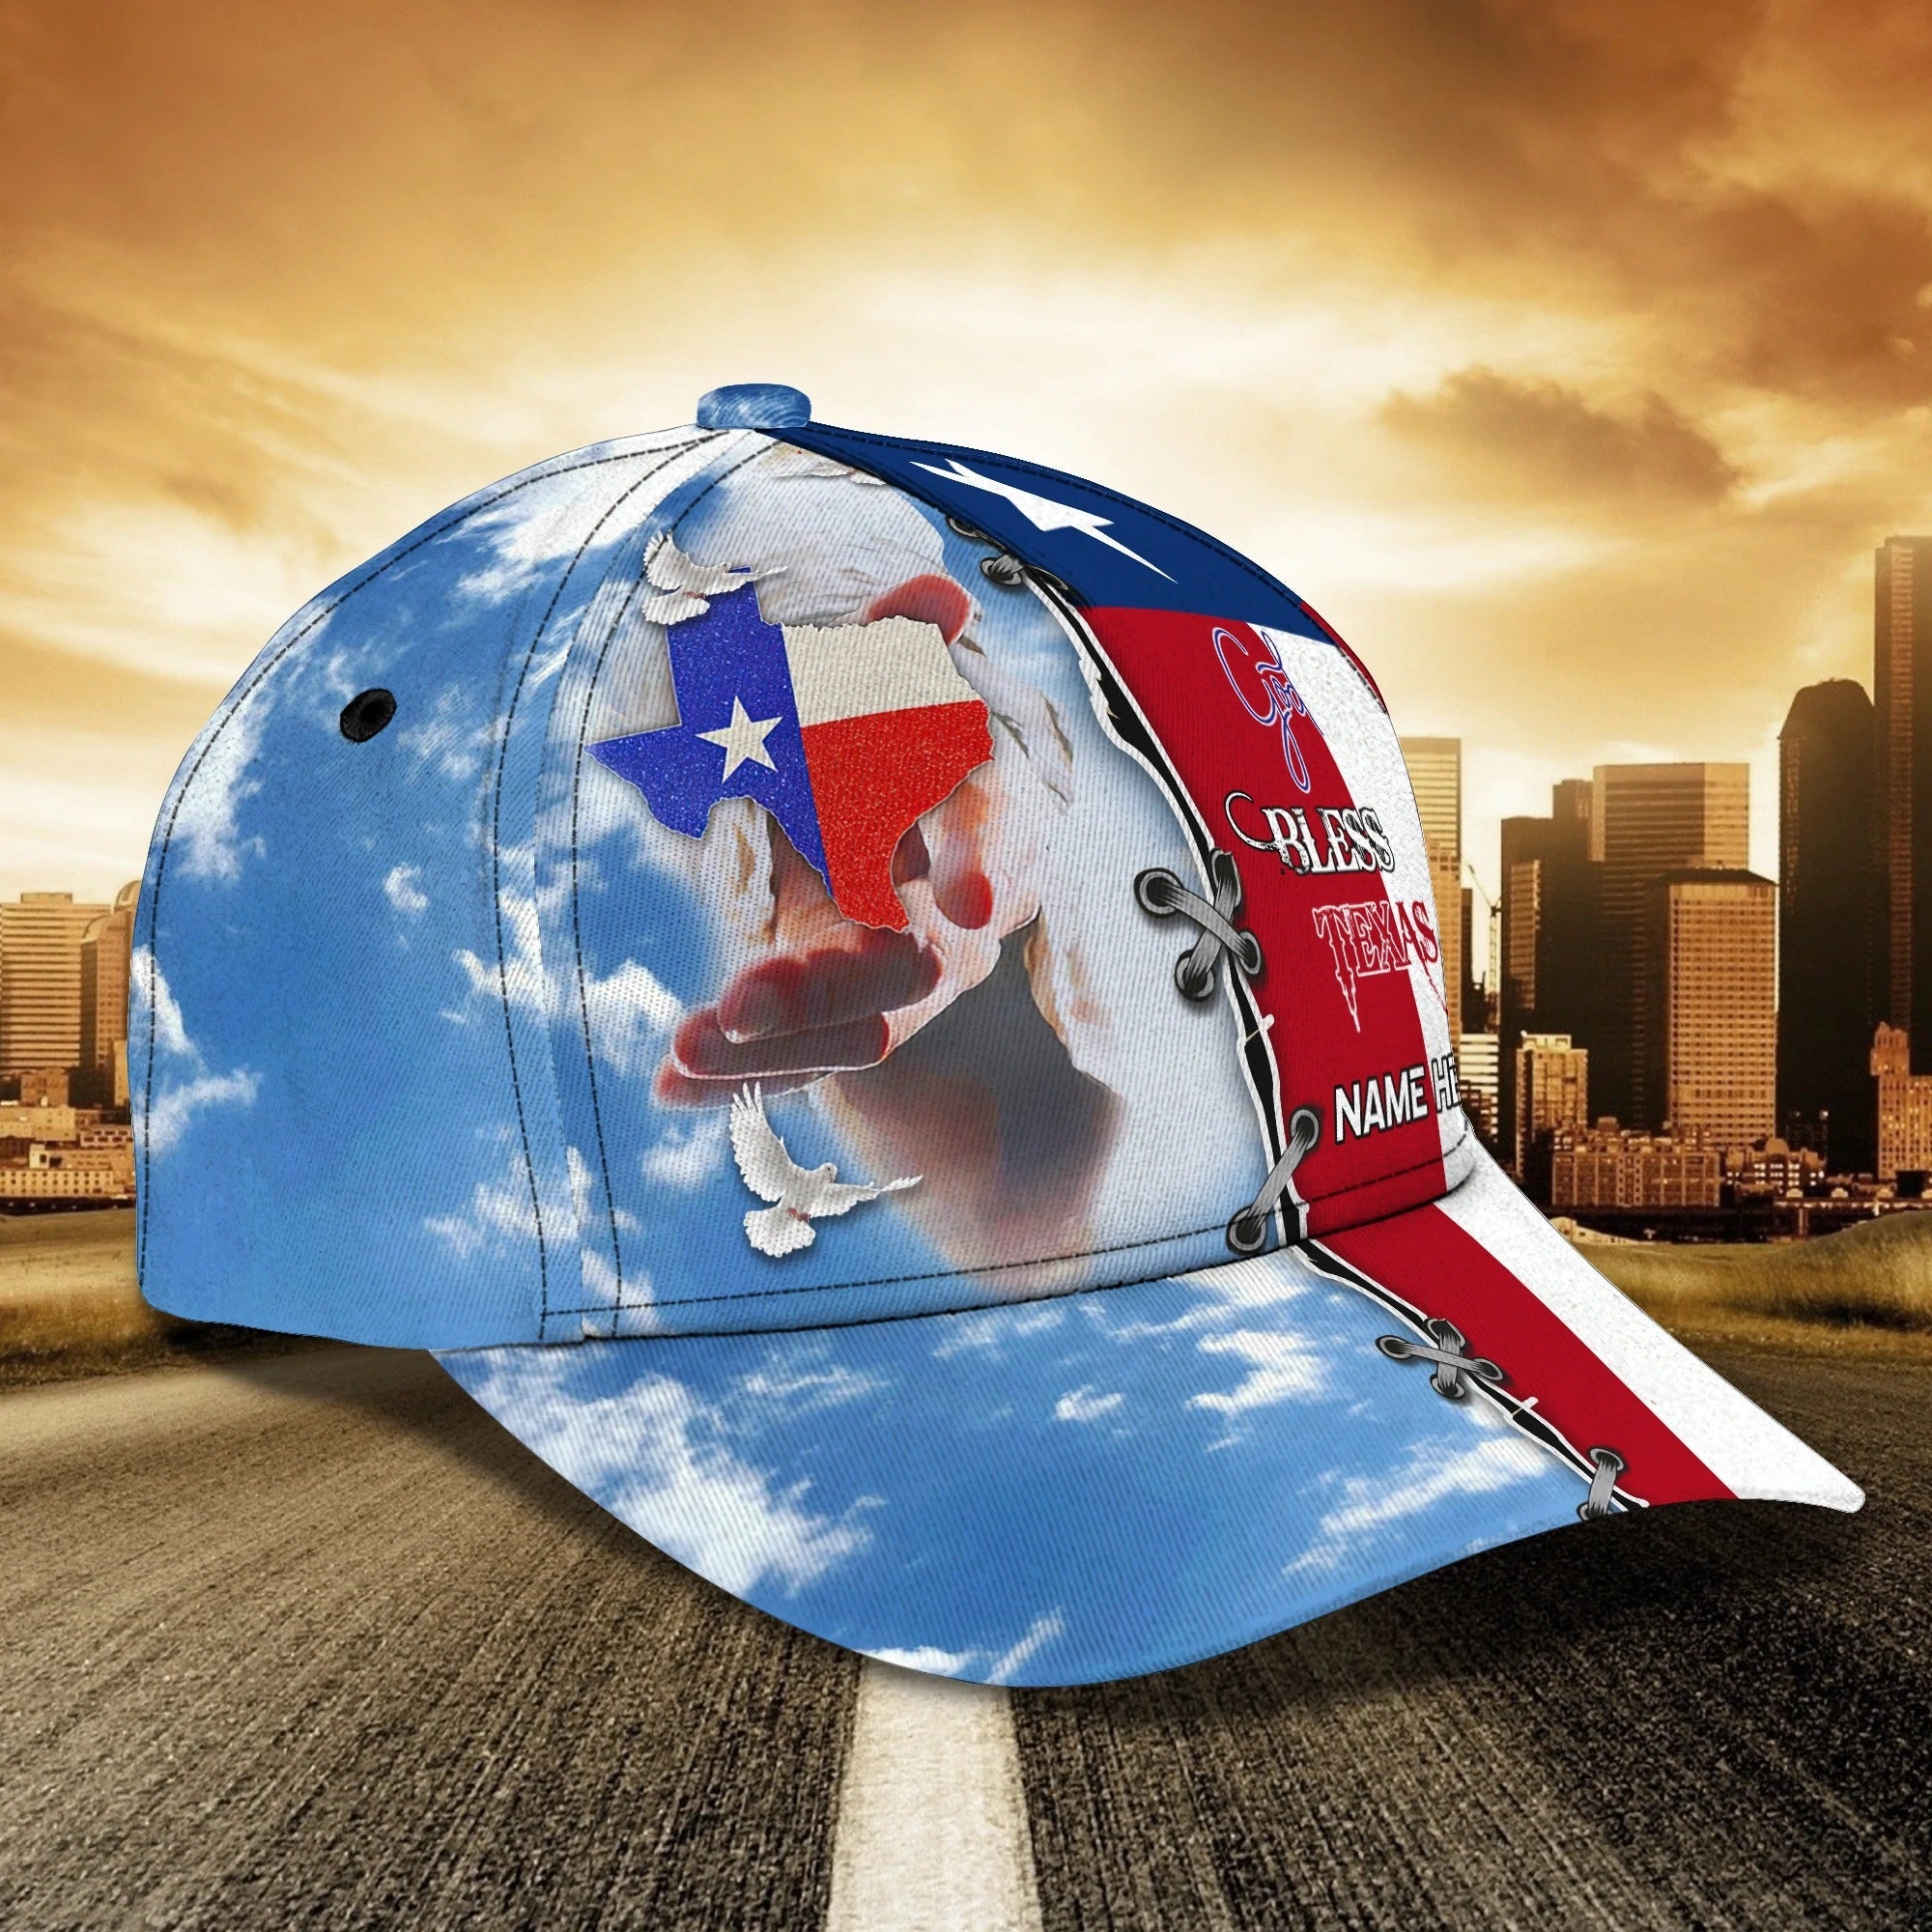 Personalized God Bless Texas 3D Full Print Baseball Cap/ Texas American Pride Cap Hat/ Texas Cap Hat